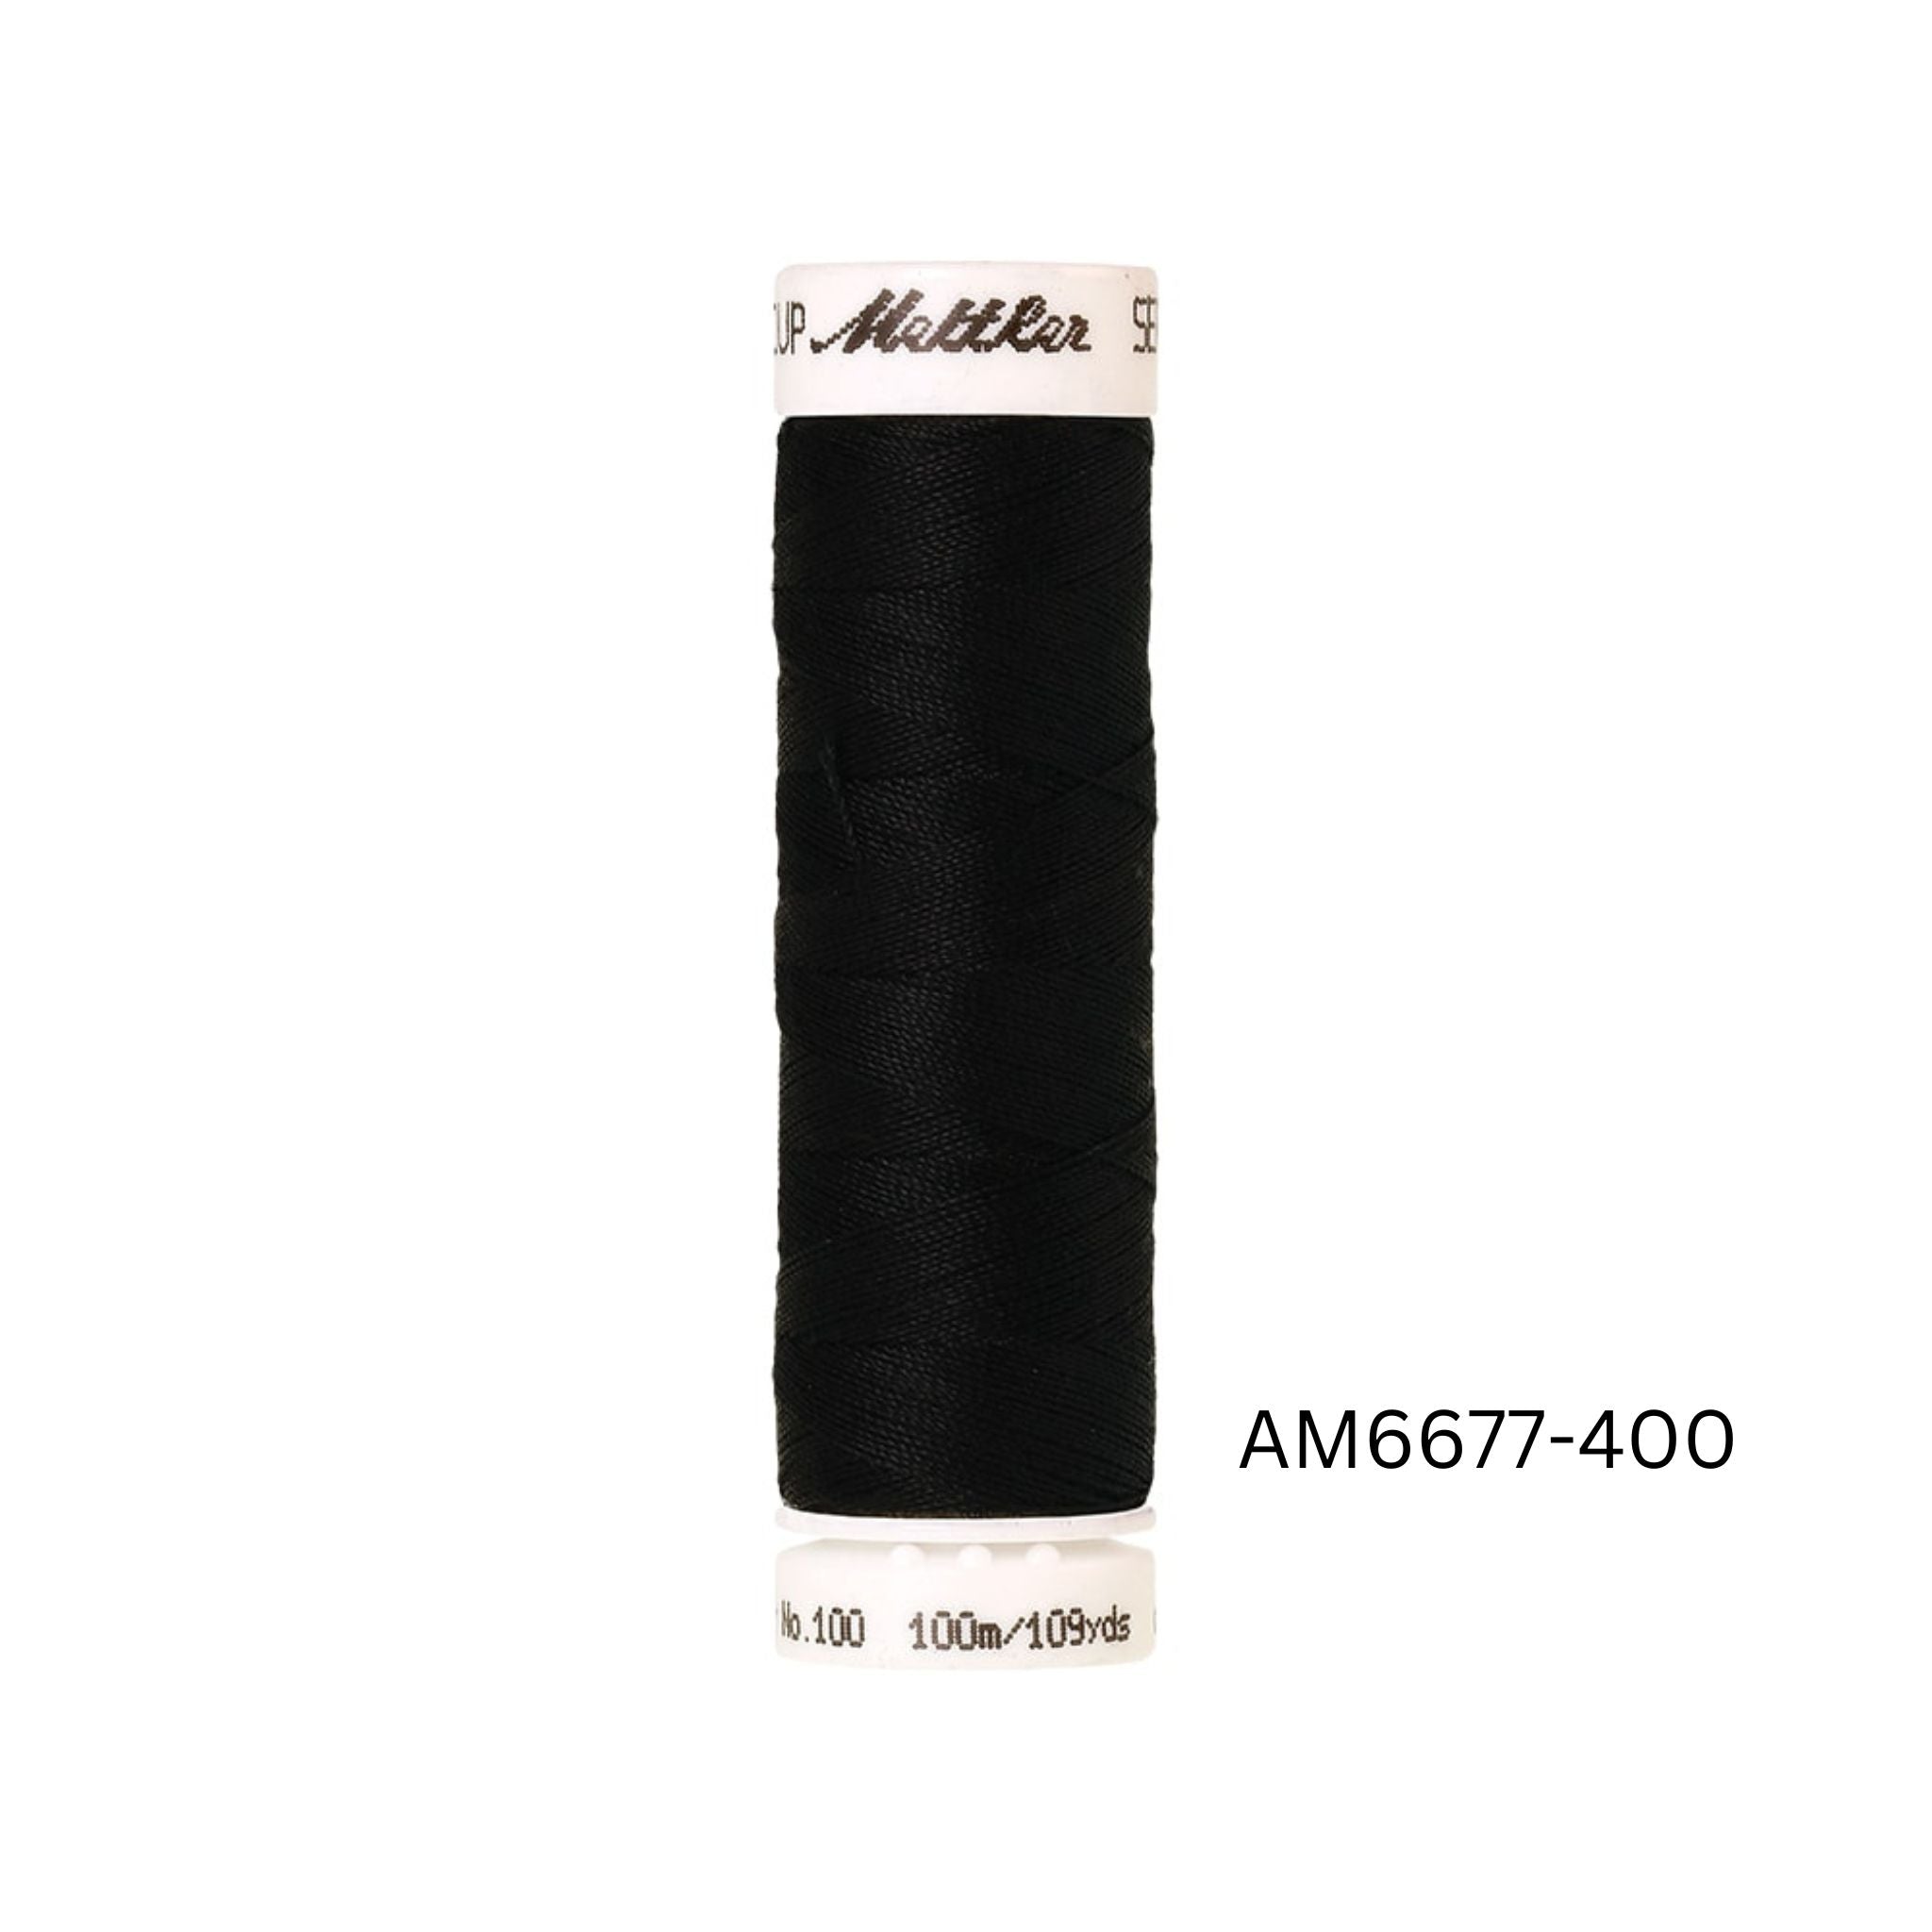 Black Mettler Seralon polyester sewing thread - 400 - 100m